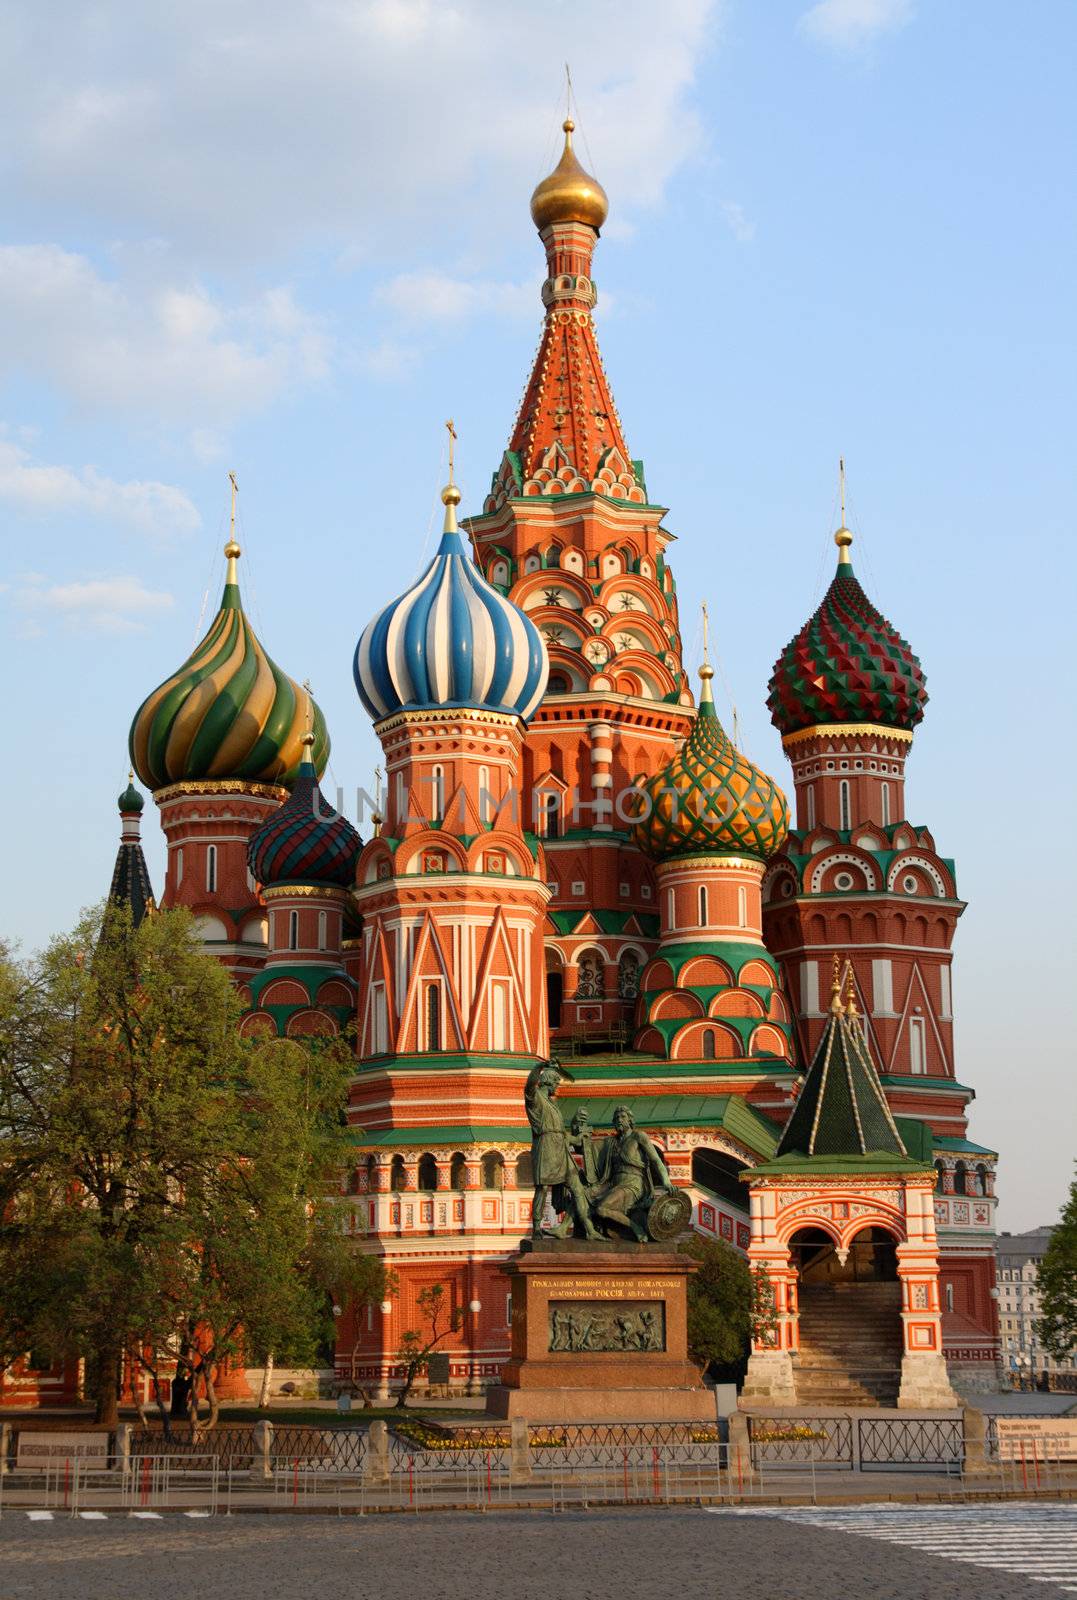 Vasiliy Blazhenniy church in Moscow by Mikko